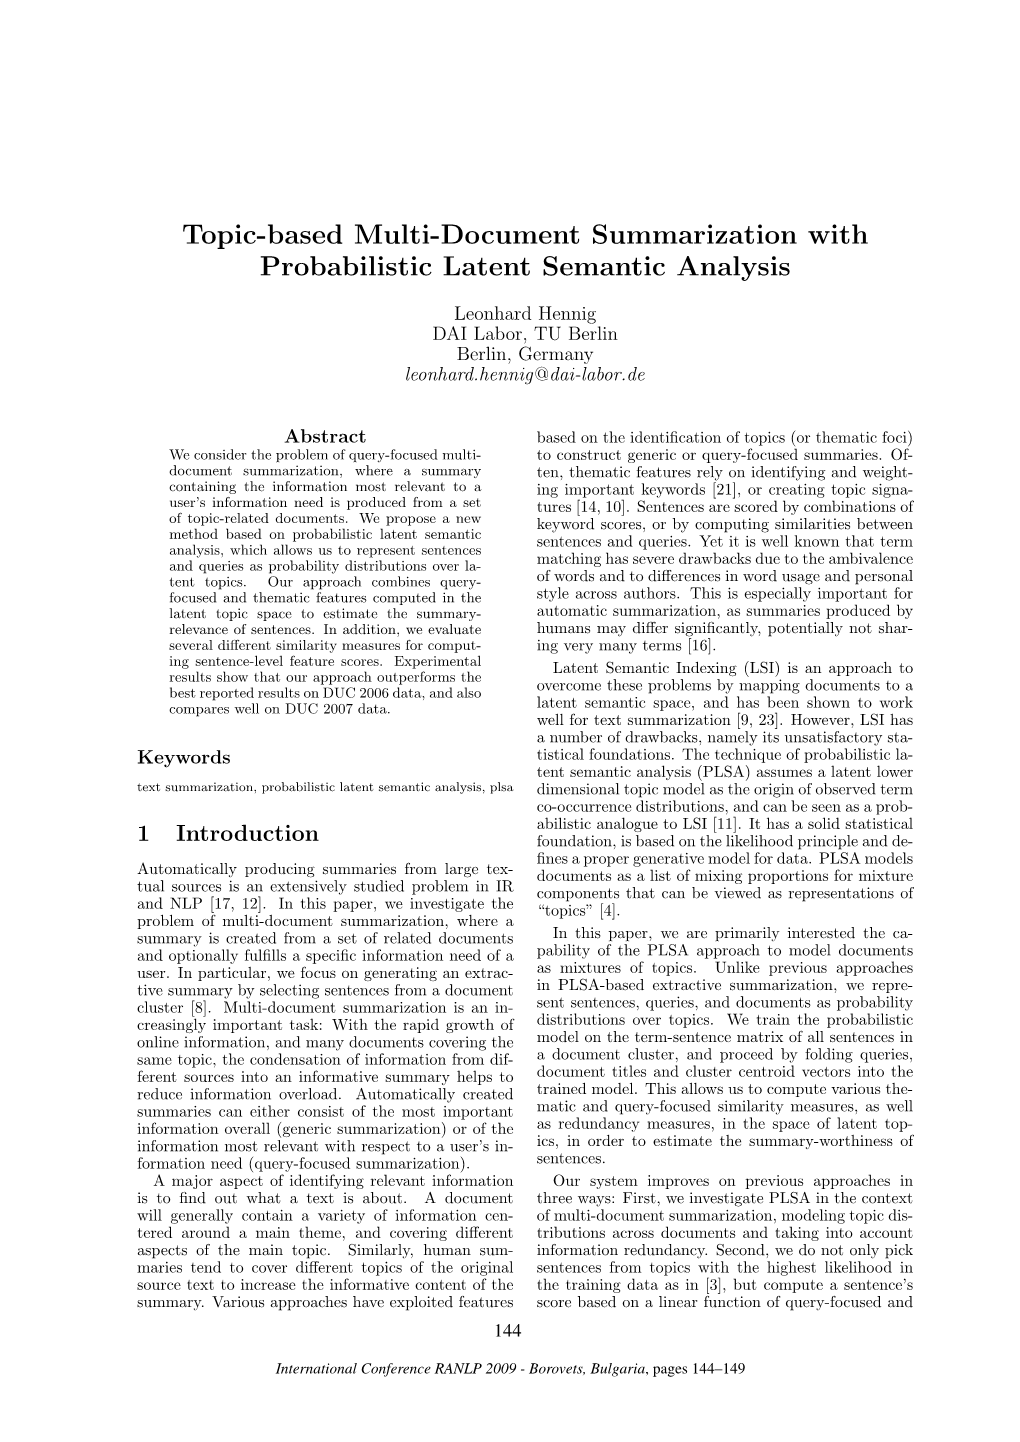 Topic-Based Multi-Document Summarization with Probabilistic Latent Semantic Analysis